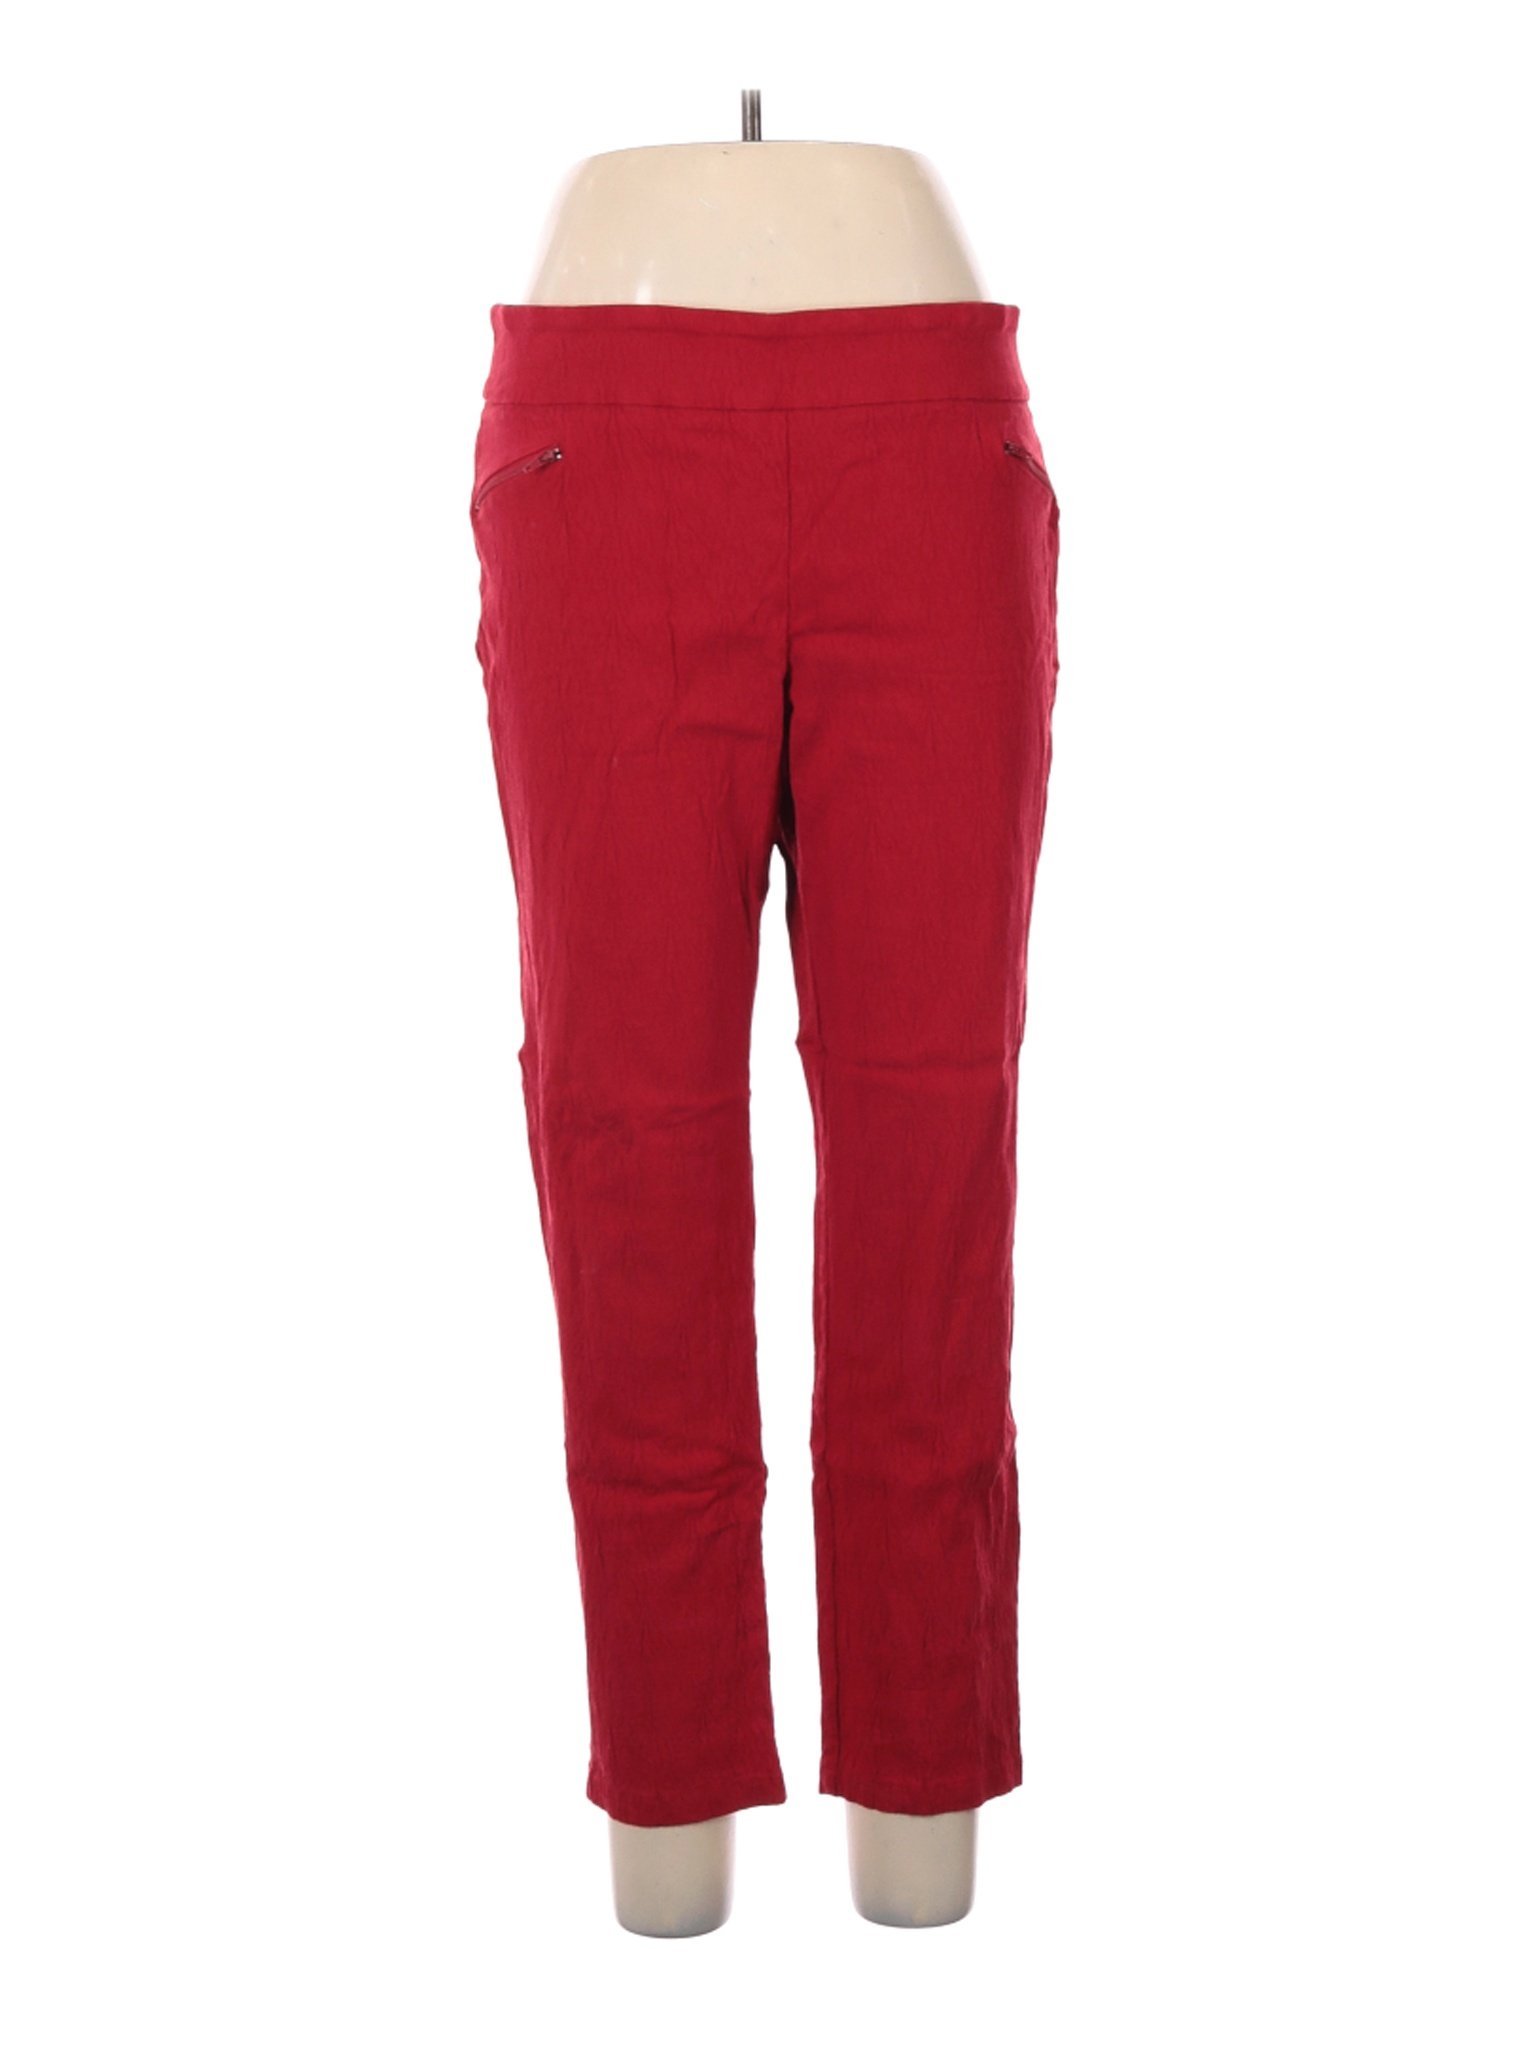 SOHO Apparel Ltd Women Red Casual Pants XL | eBay